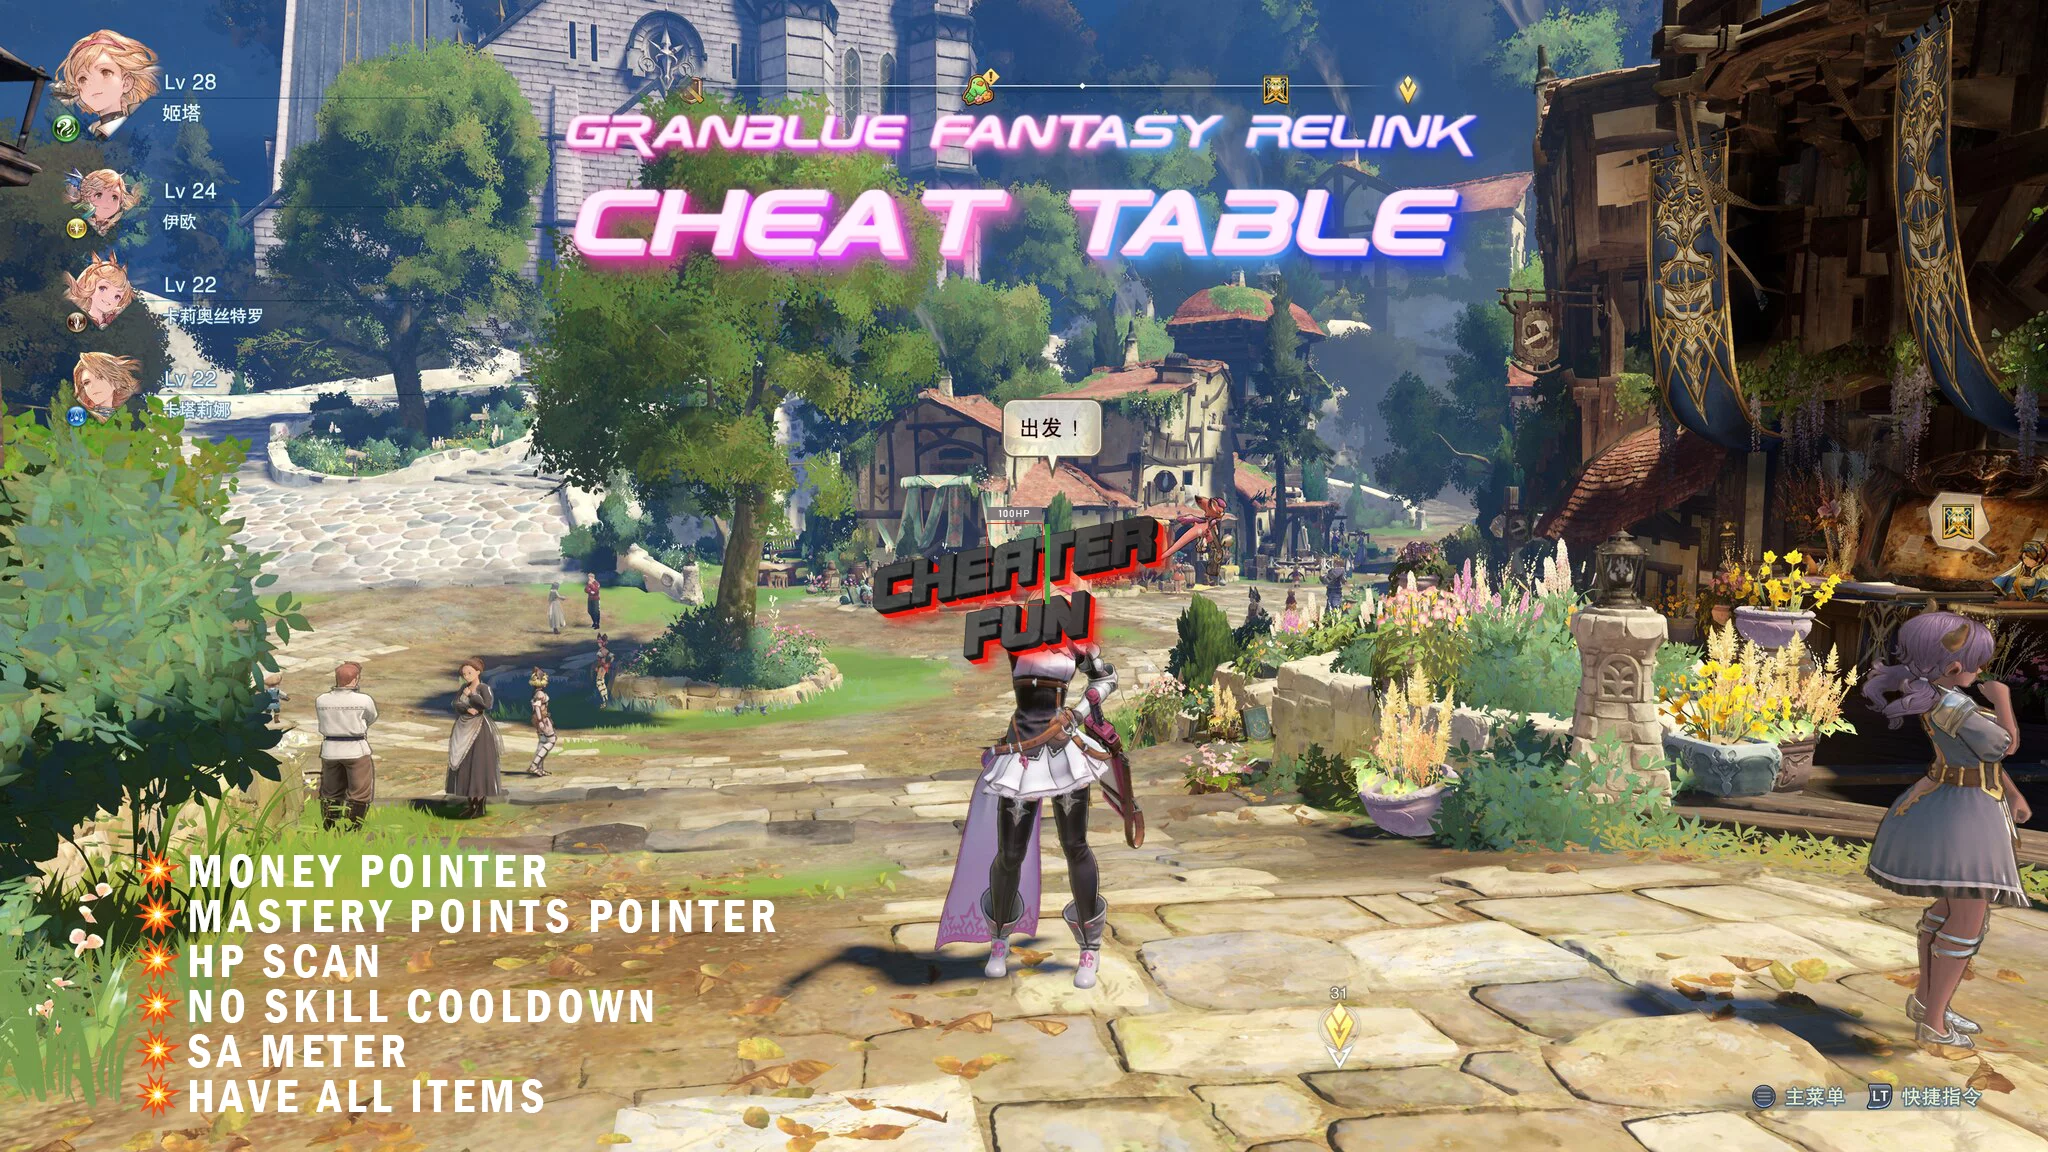 Granblue Fantasy Relink Steam - Cheat Table